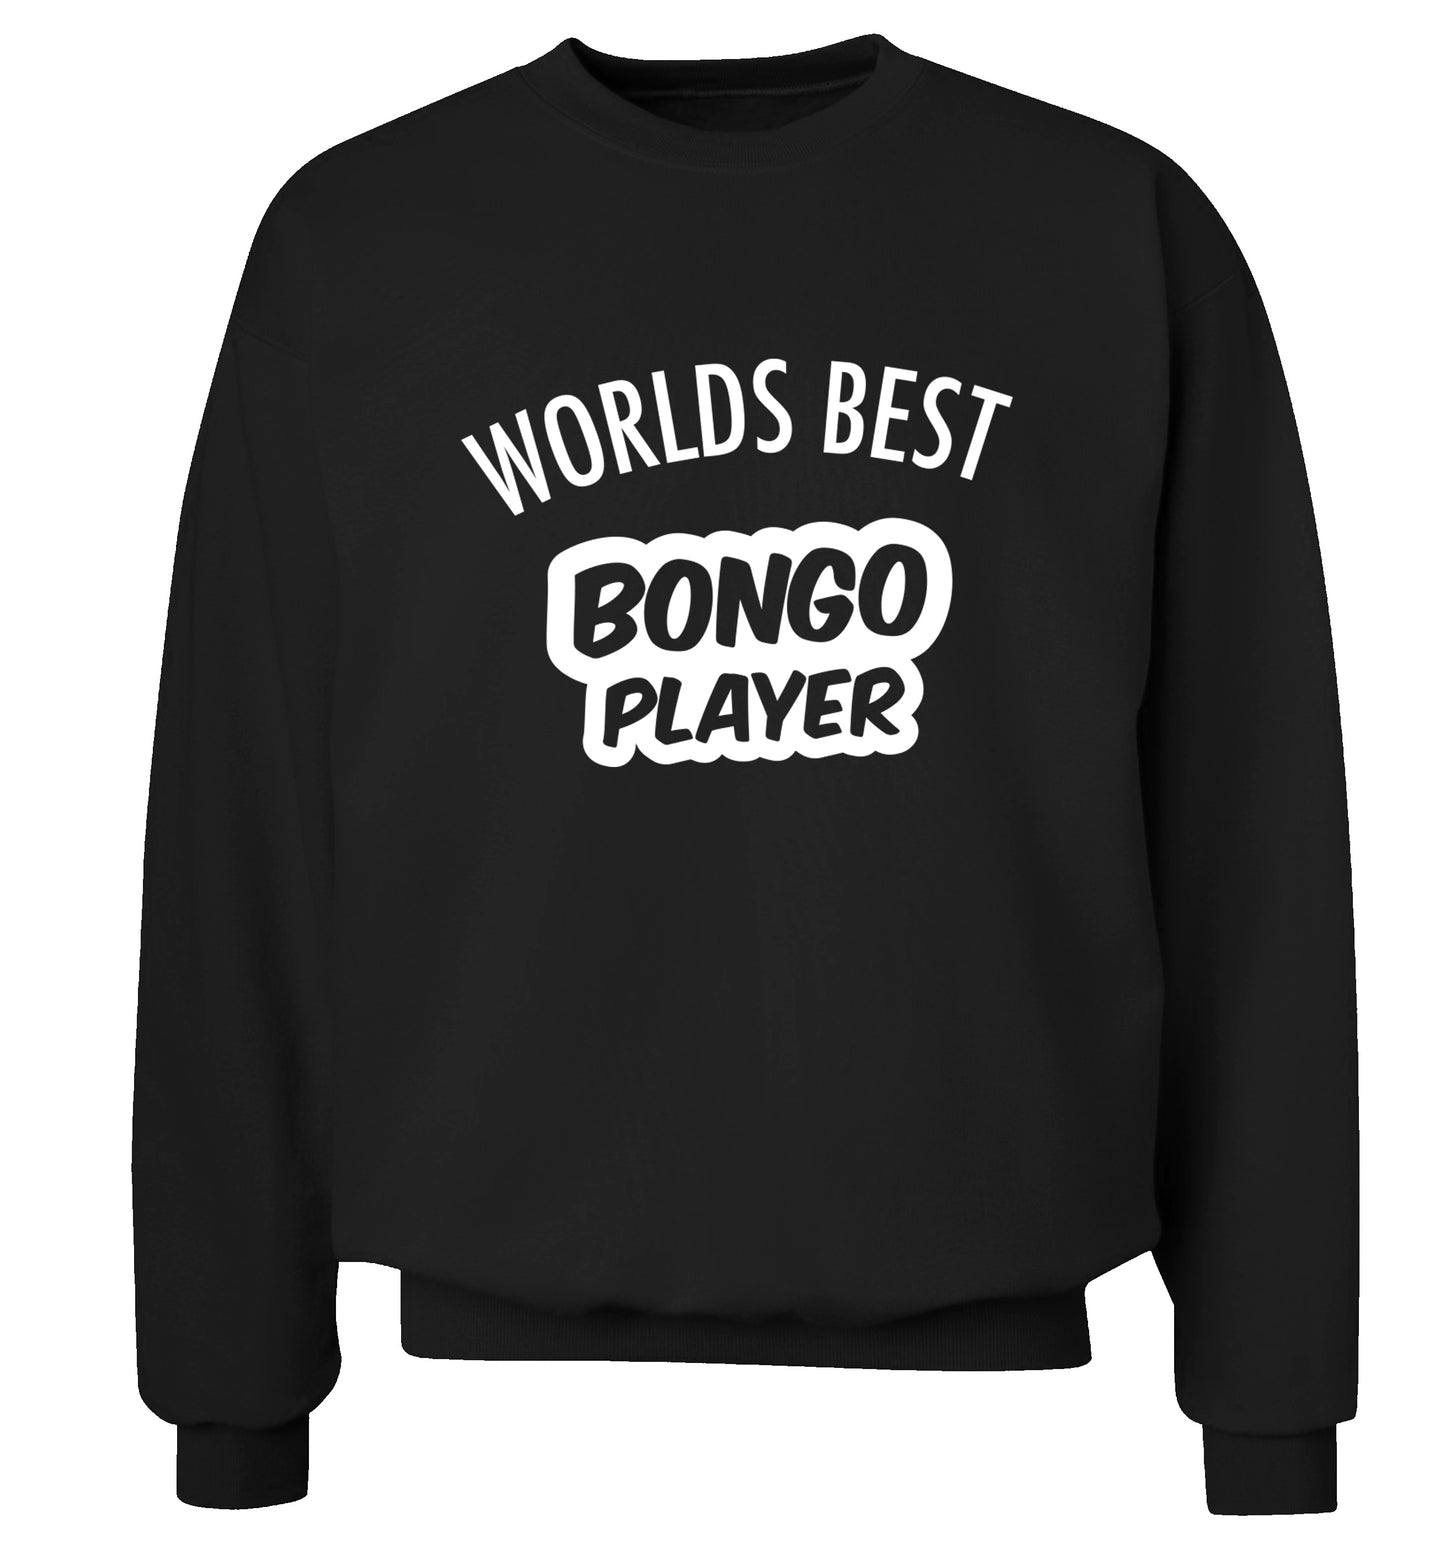 Worlds best bongo player Adult's unisex black Sweater 2XL